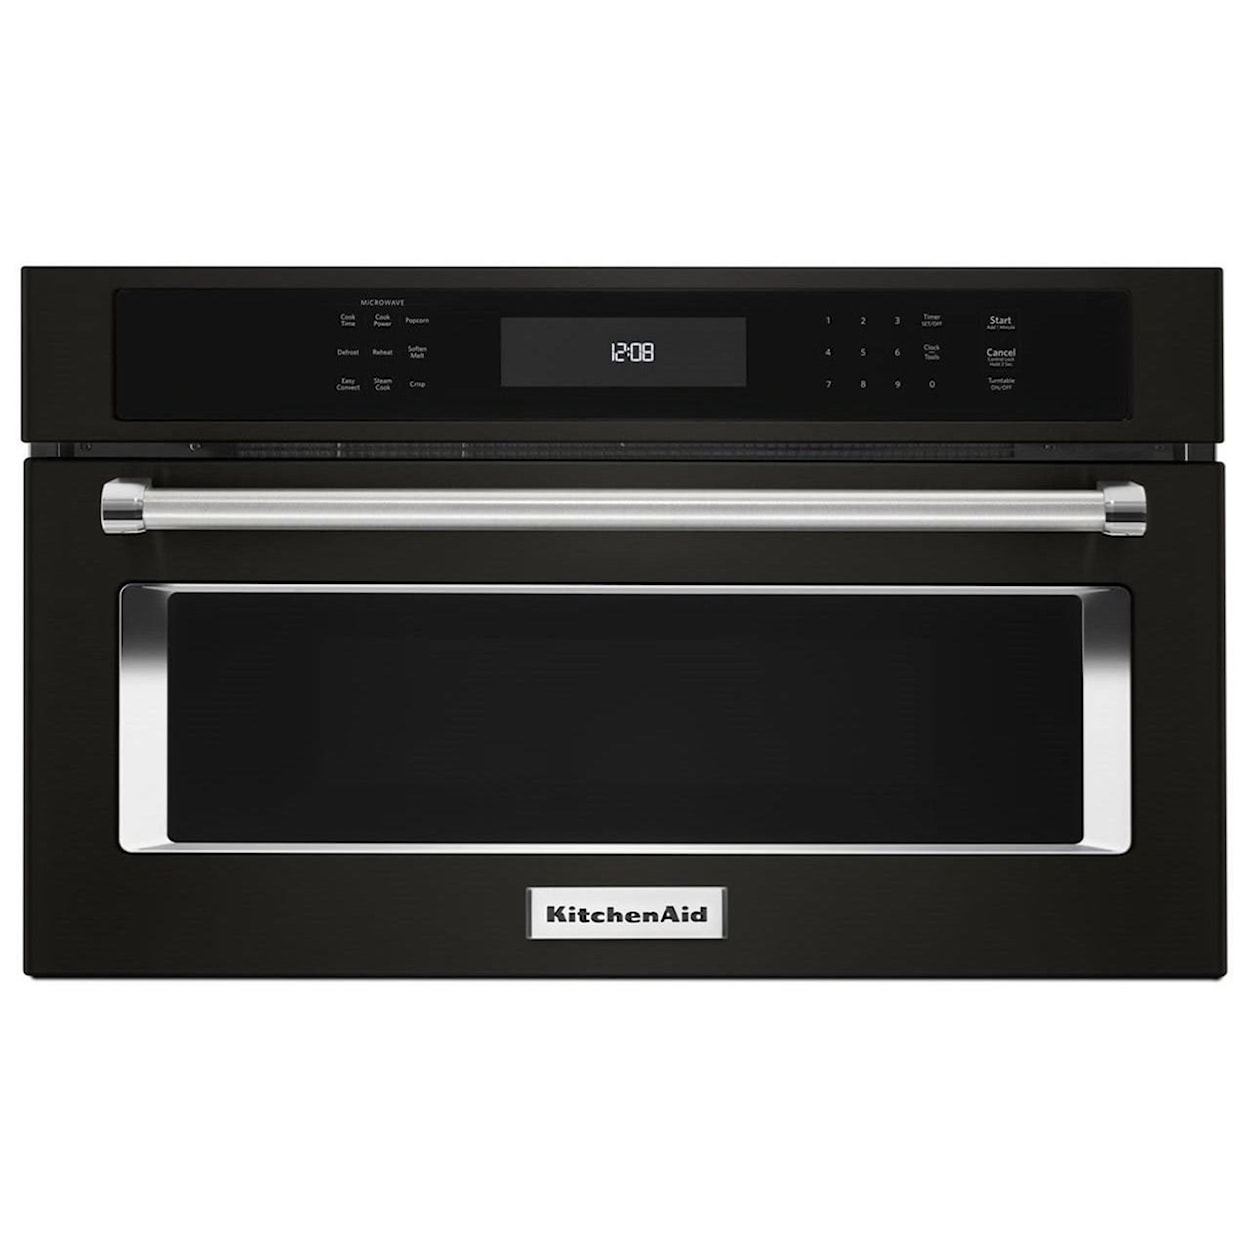 KitchenAid Microwaves - Kitchenaid 27" Built-In Microwave Oven